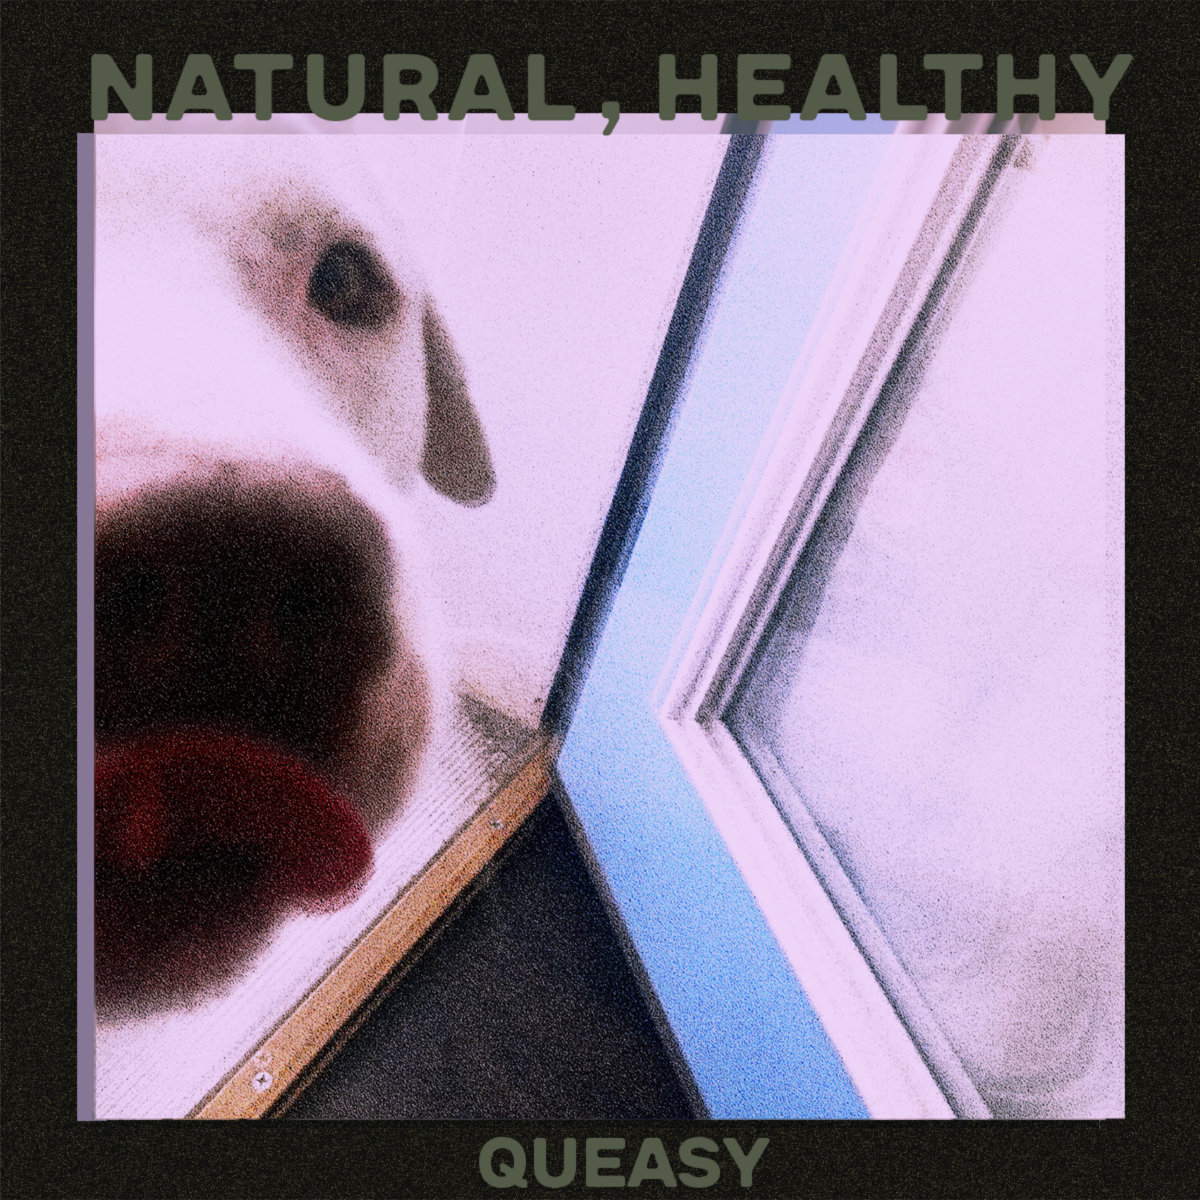 QueasyはEP 'Natural, Healthy'をリリースしました queasyphl.bandcamp.com/album/natural-…